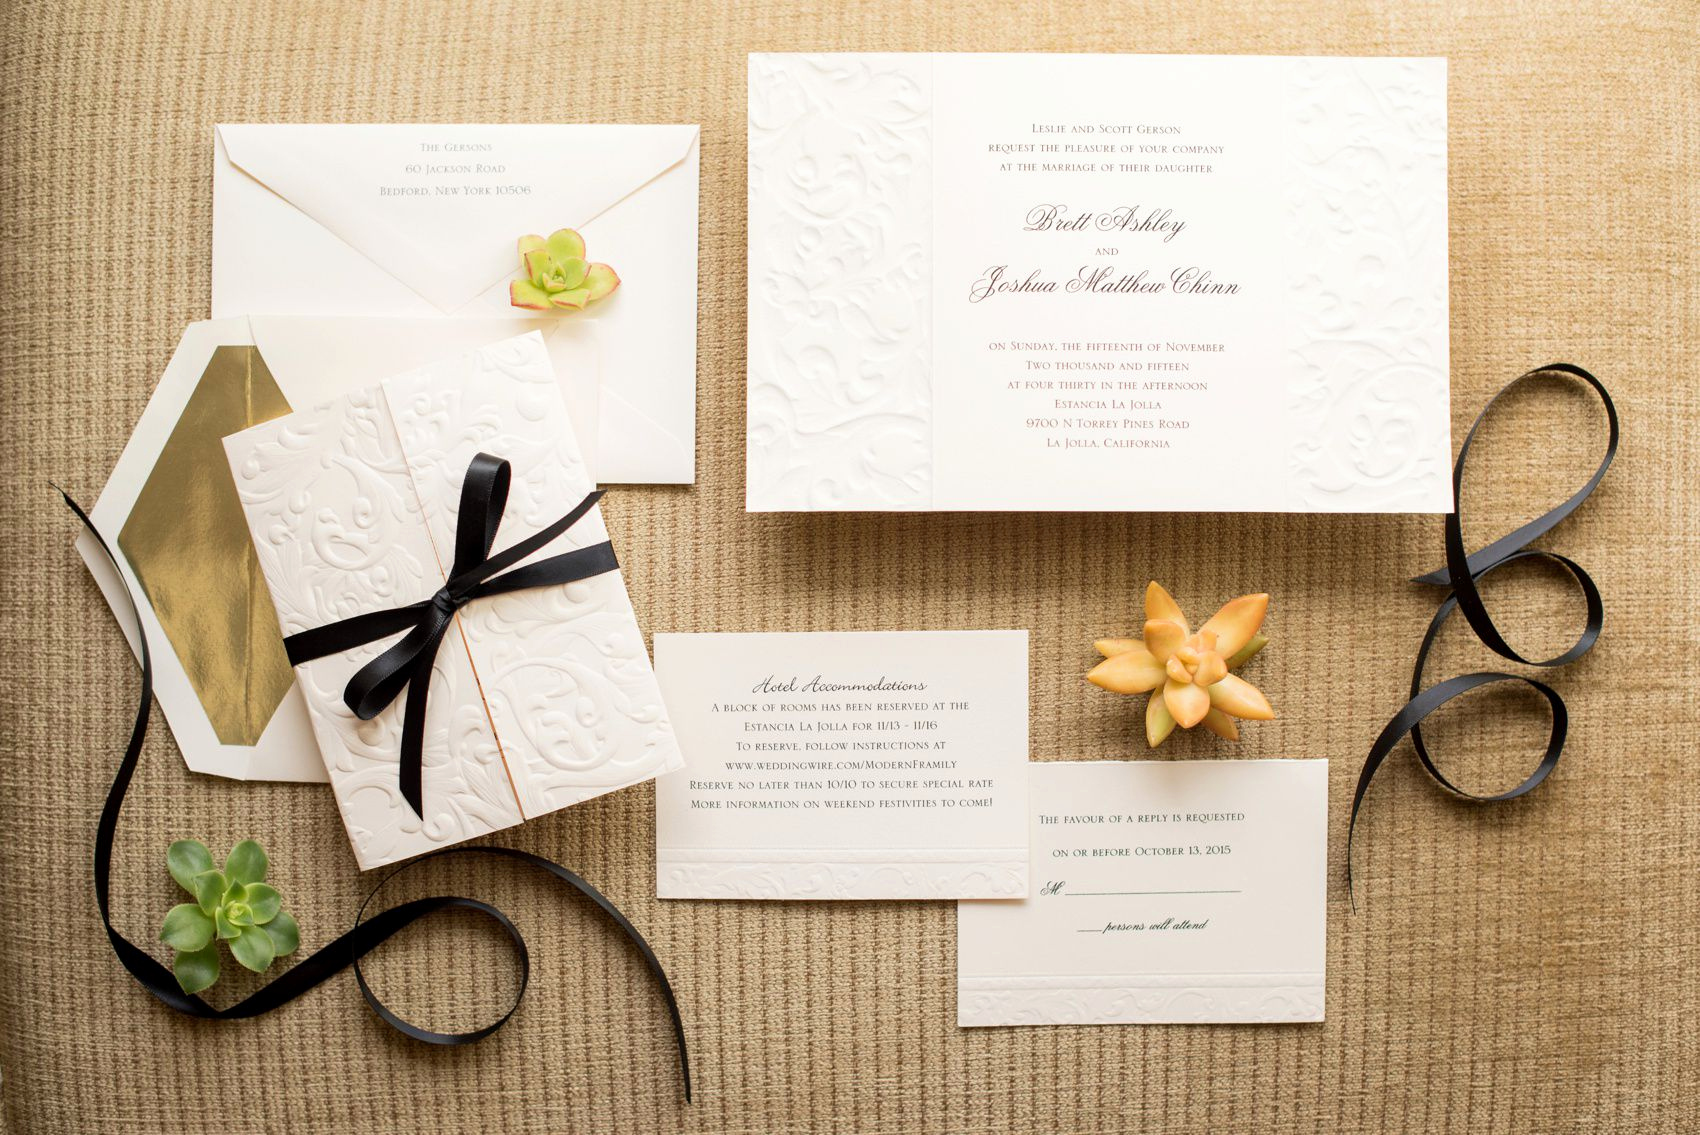 Best Wedding Invitation Cards Designs Inspirational Card Template Best Wedding Invitations Cards Card